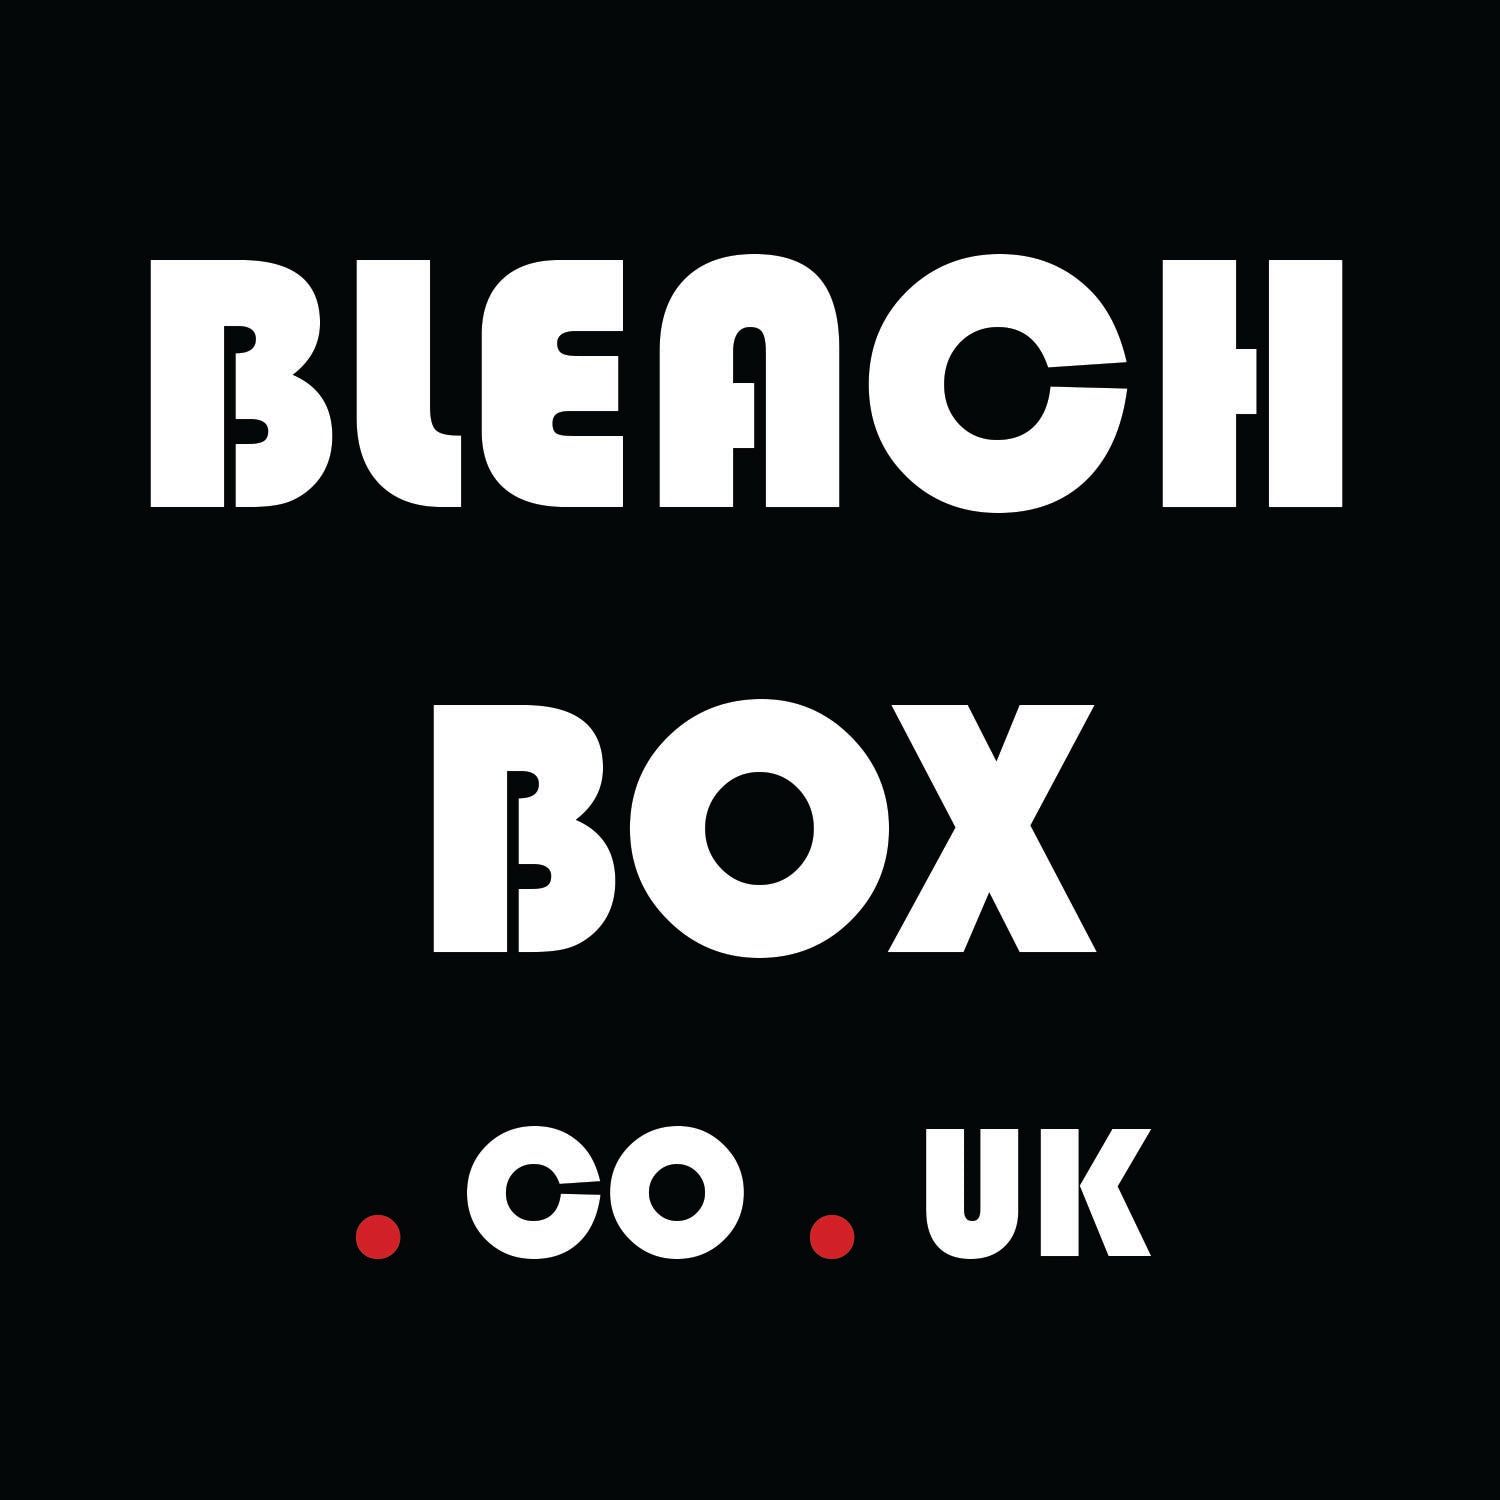 Bleach Box Richard Heeps Gallery